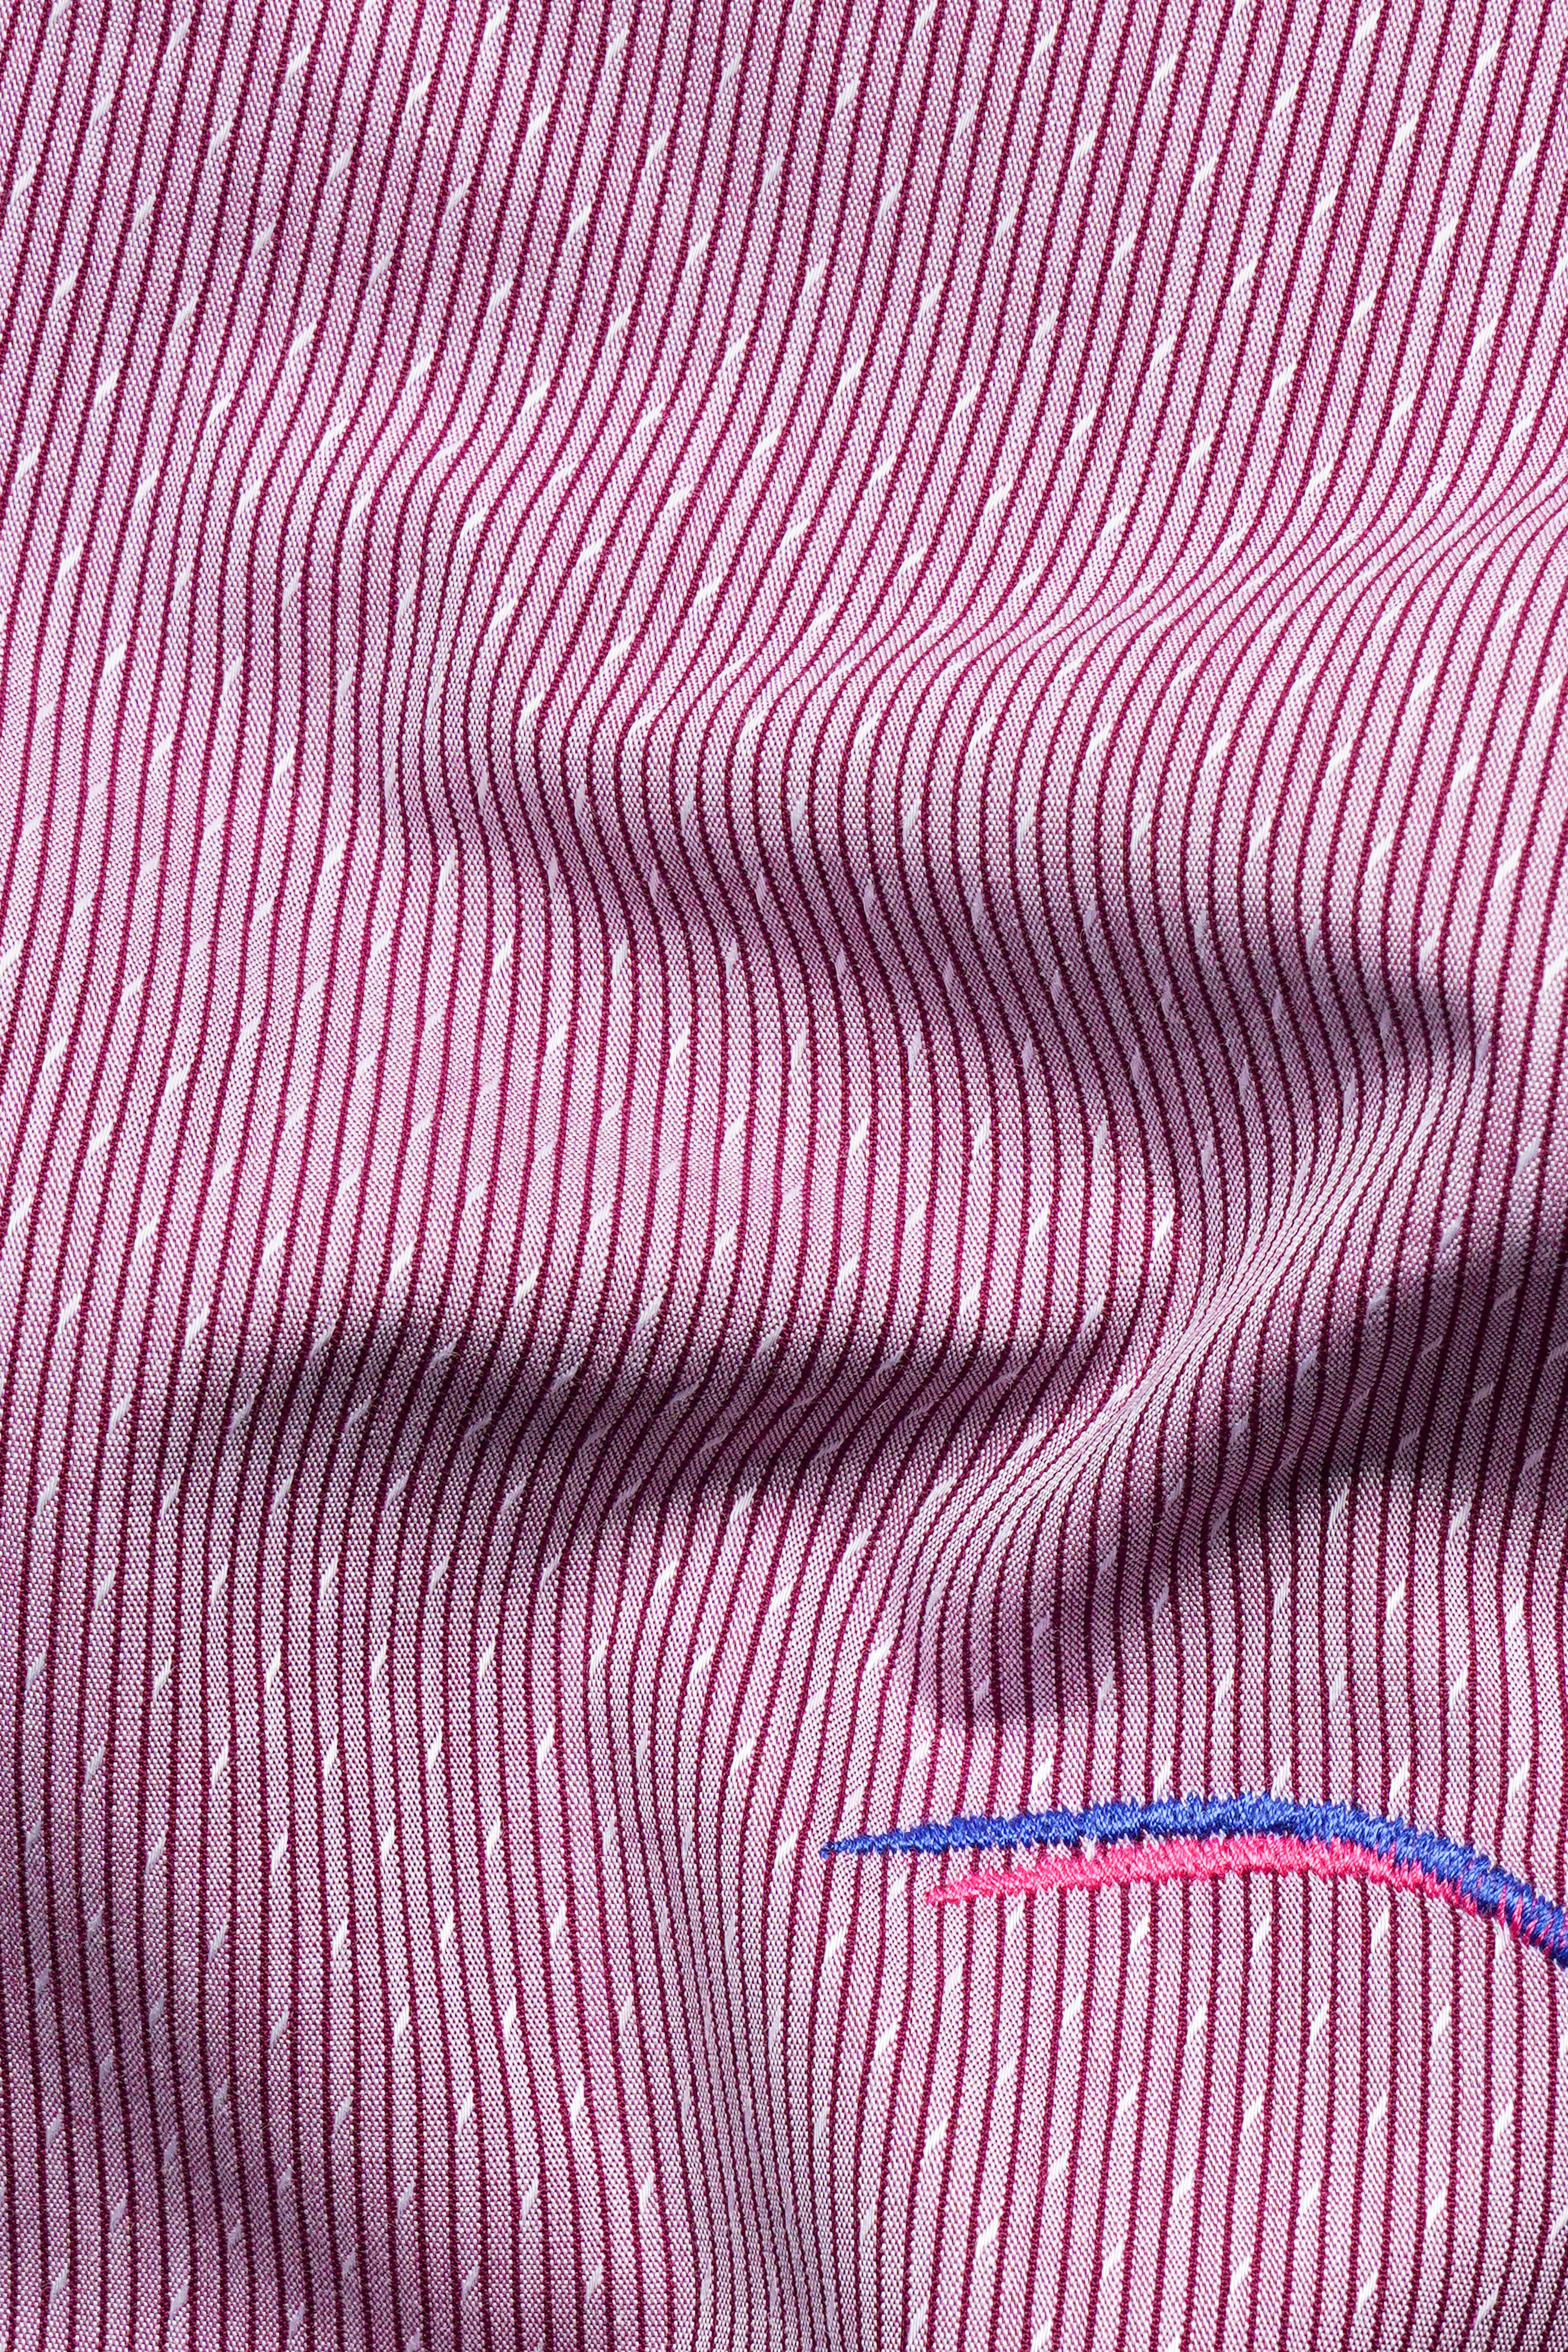 Illusion and Boysenberry Pink Striped Bird Patchwork Dobby Giza Cotton Designer Shirt 6106-CA-E211-38, 6106-CA-E211-H-38, 6106-CA-E211-39, 6106-CA-E211-H-39, 6106-CA-E211-40, 6106-CA-E211-H-40, 6106-CA-E211-42, 6106-CA-E211-H-42, 6106-CA-E211-44, 6106-CA-E211-H-44, 6106-CA-E211-46, 6106-CA-E211-H-46, 6106-CA-E211-48, 6106-CA-E211-H-48, 6106-CA-E211-50, 6106-CA-E211-H-50, 6106-CA-E211-52, 6106-CA-E211-H-52